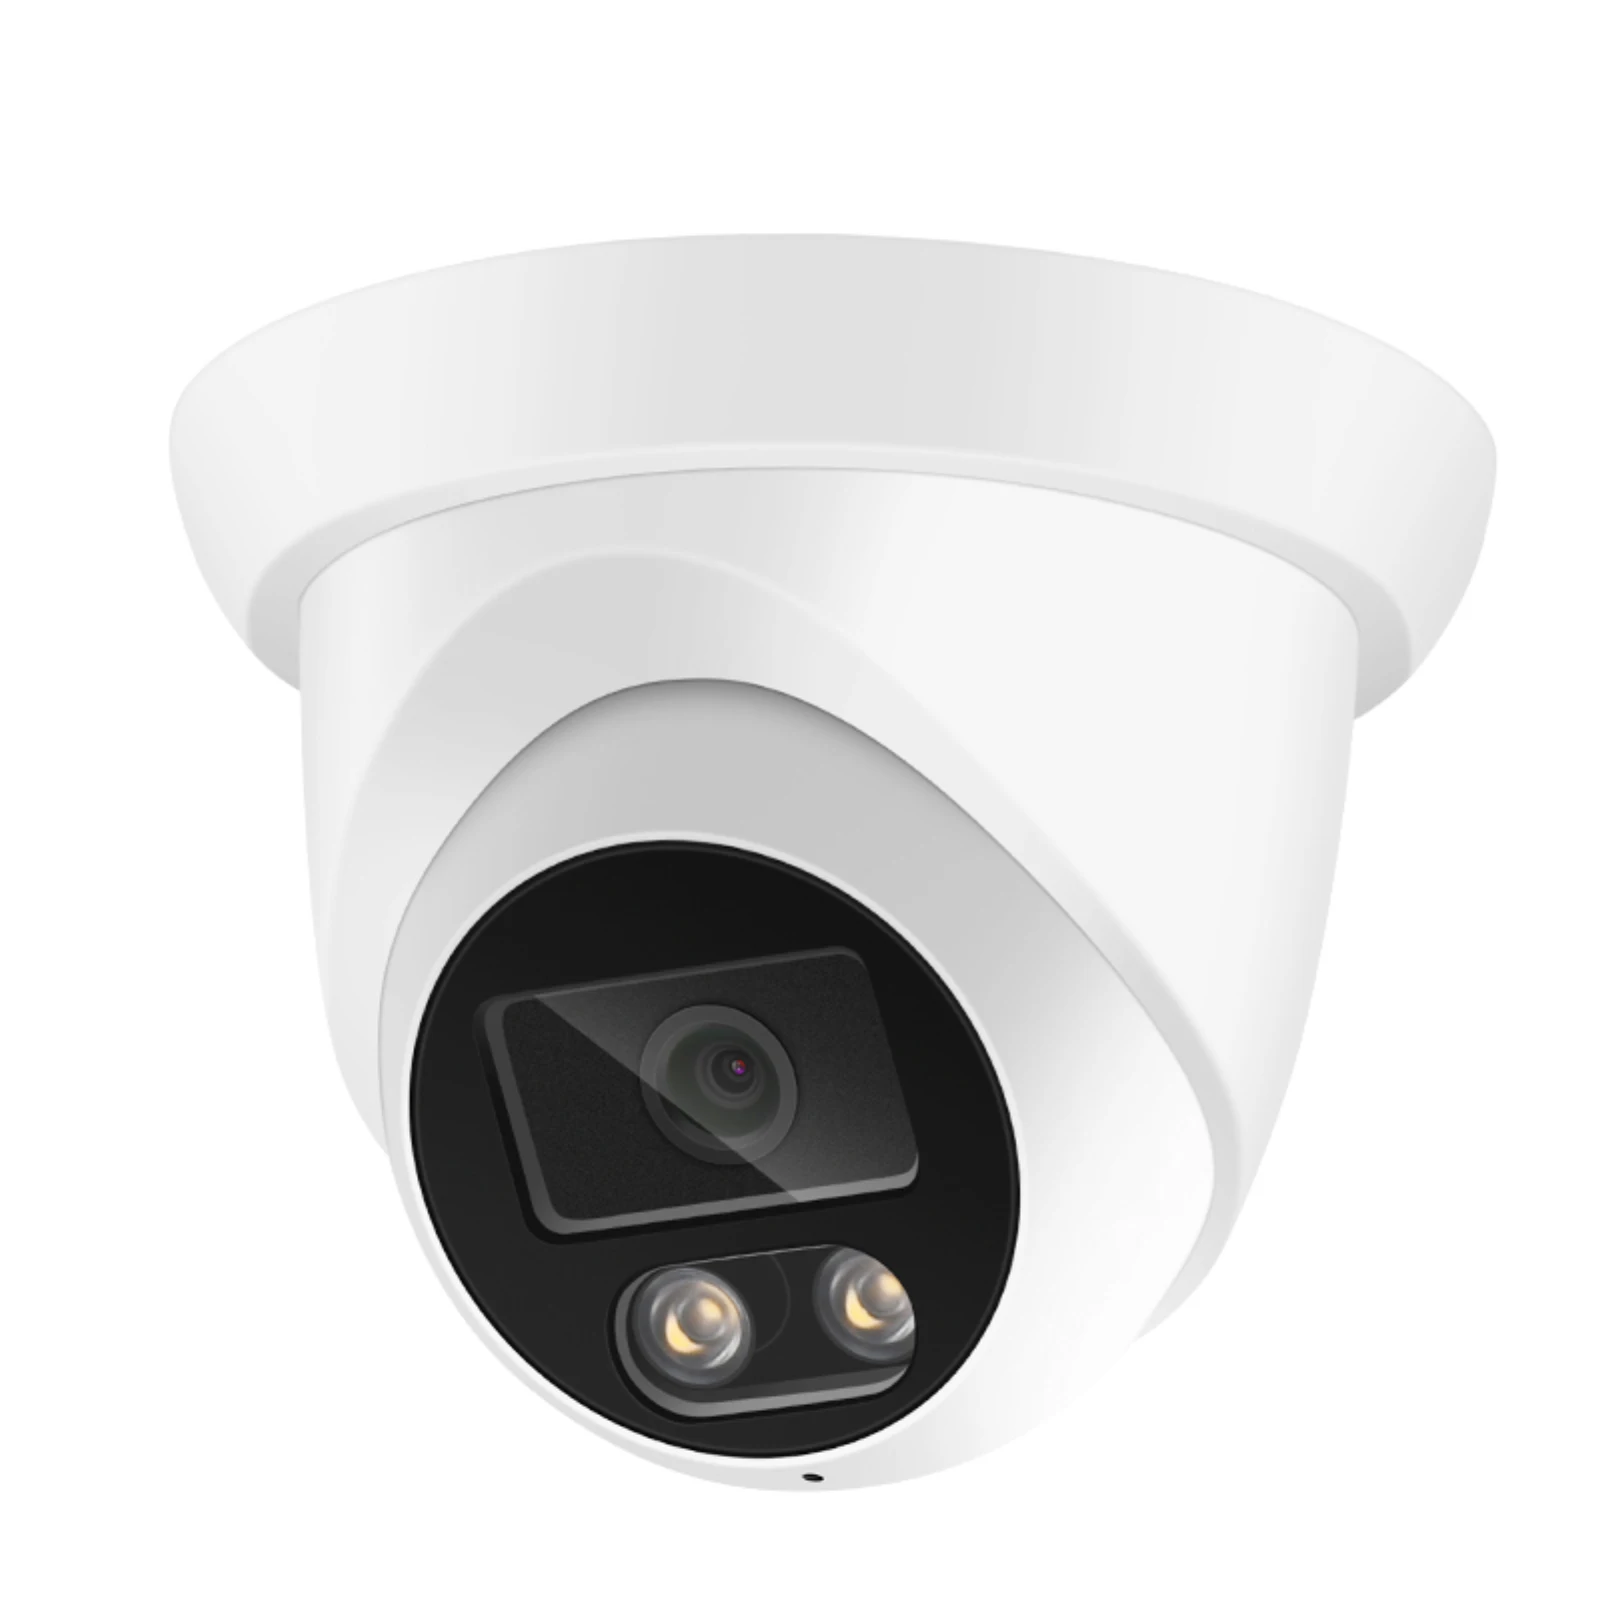 

New 8MP 4K IP POE Camera Outdoor Face Detection Audio Dual Light H.265 Onvif CCTV Metal Dome POE Surveillance Security RTSP